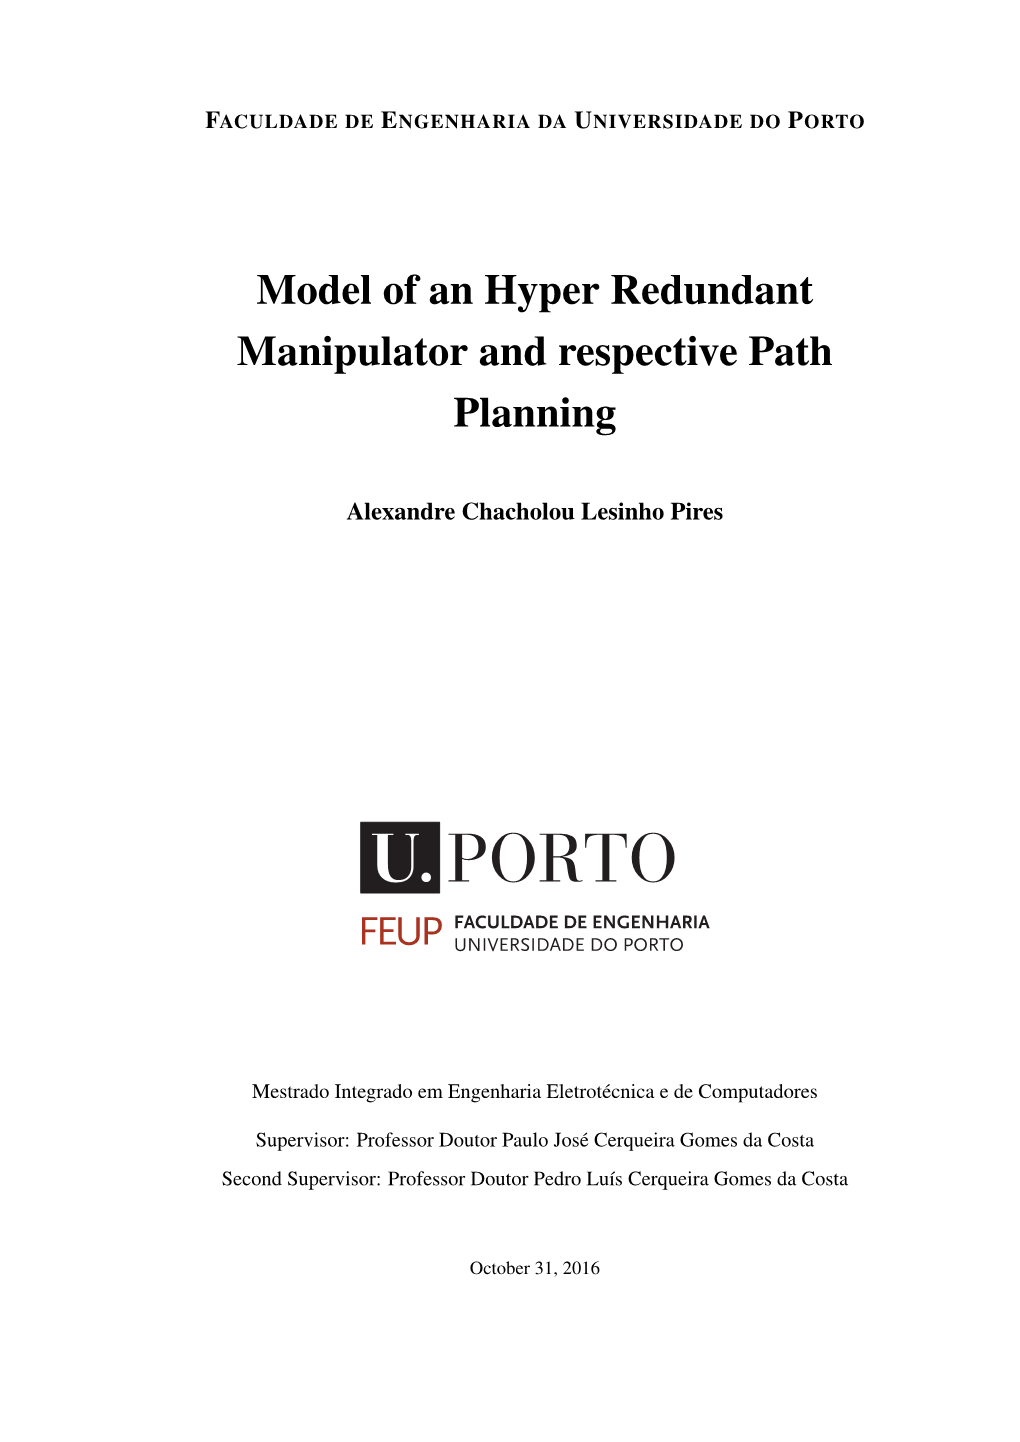 Model of an Hyper Redundant Manipulator and Respective Path Planning